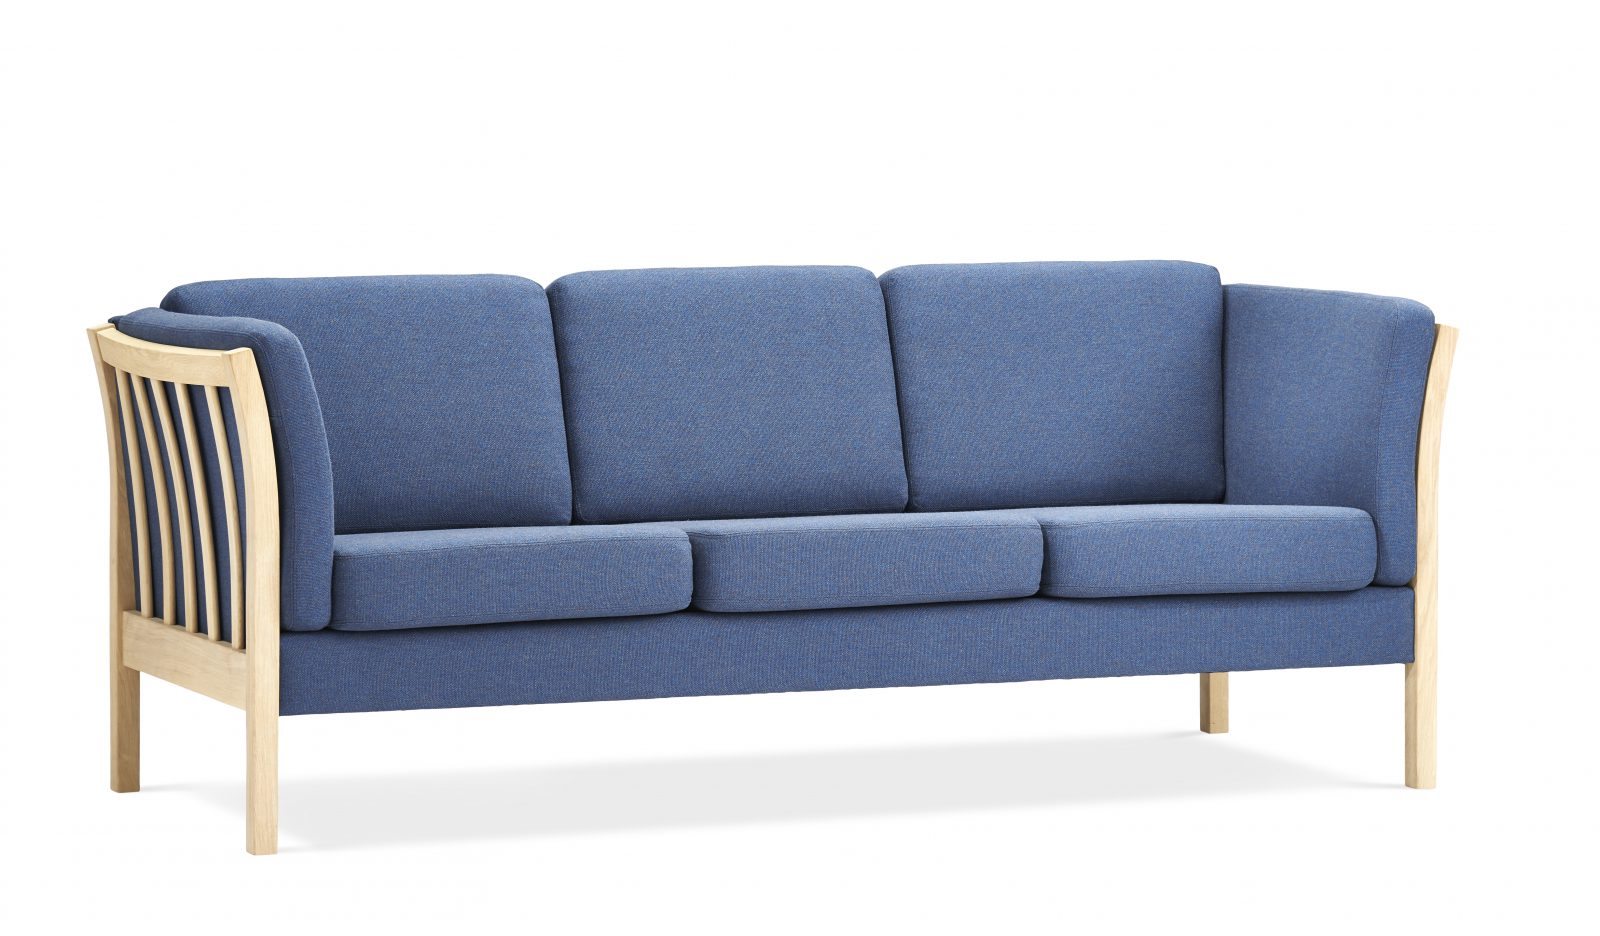 Sanne Sofa by Stouby - Nordic Urban